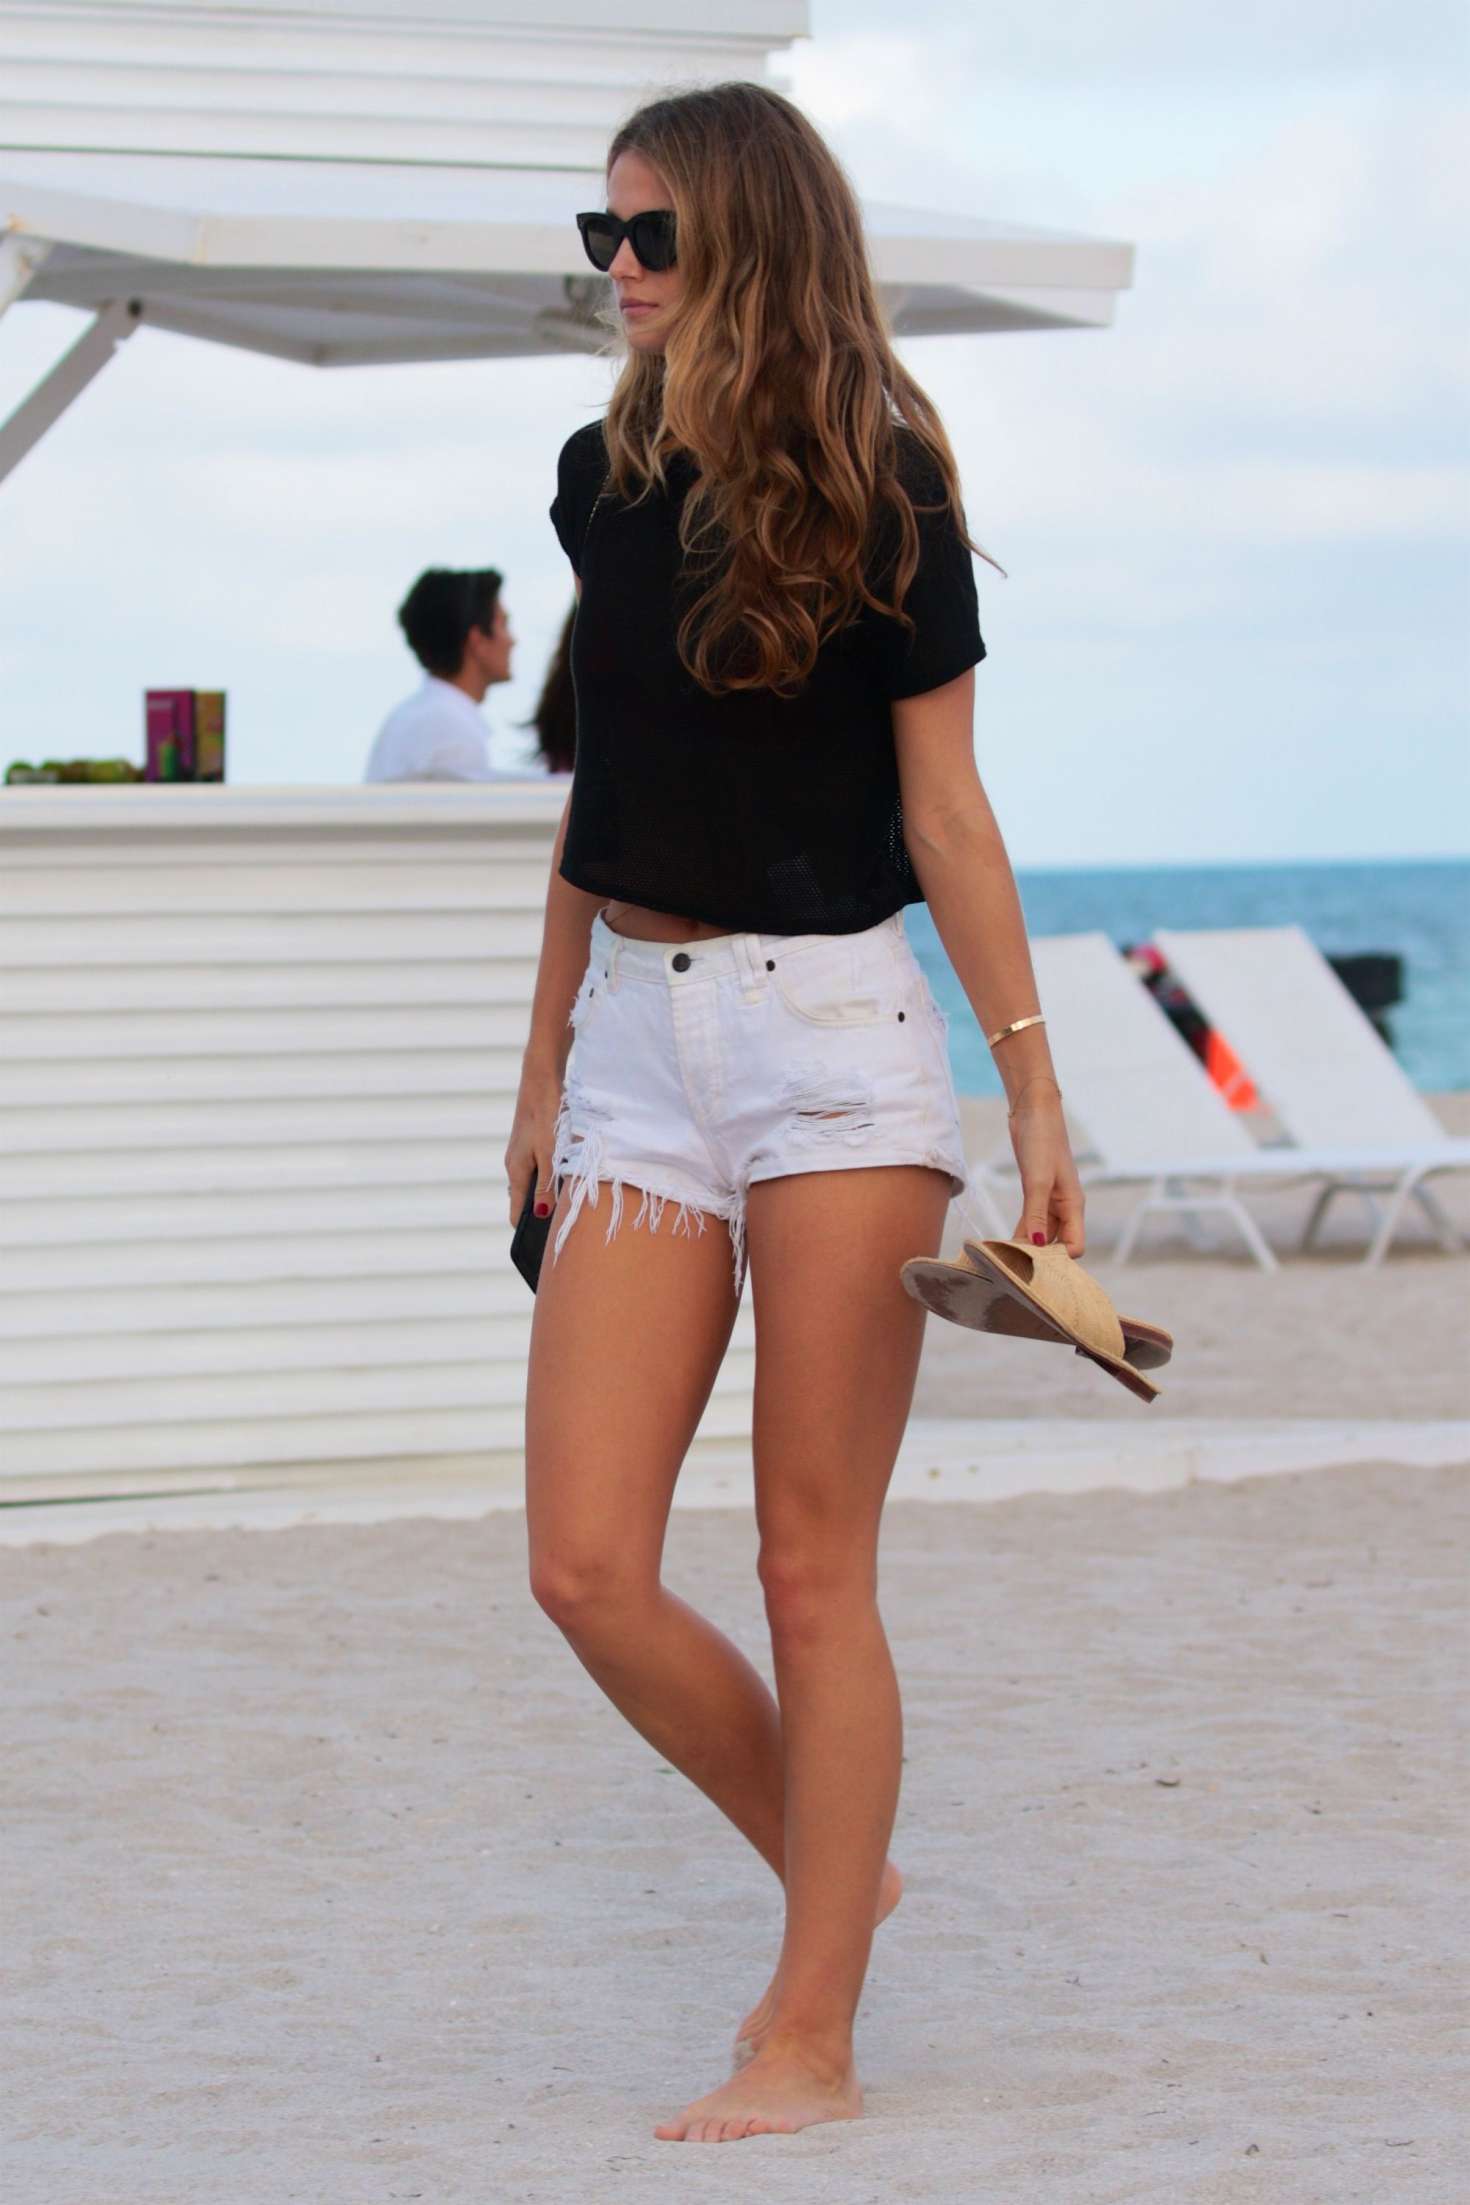 Kate Bock Bikini Candids At The Beach In Miami Beach15 Got